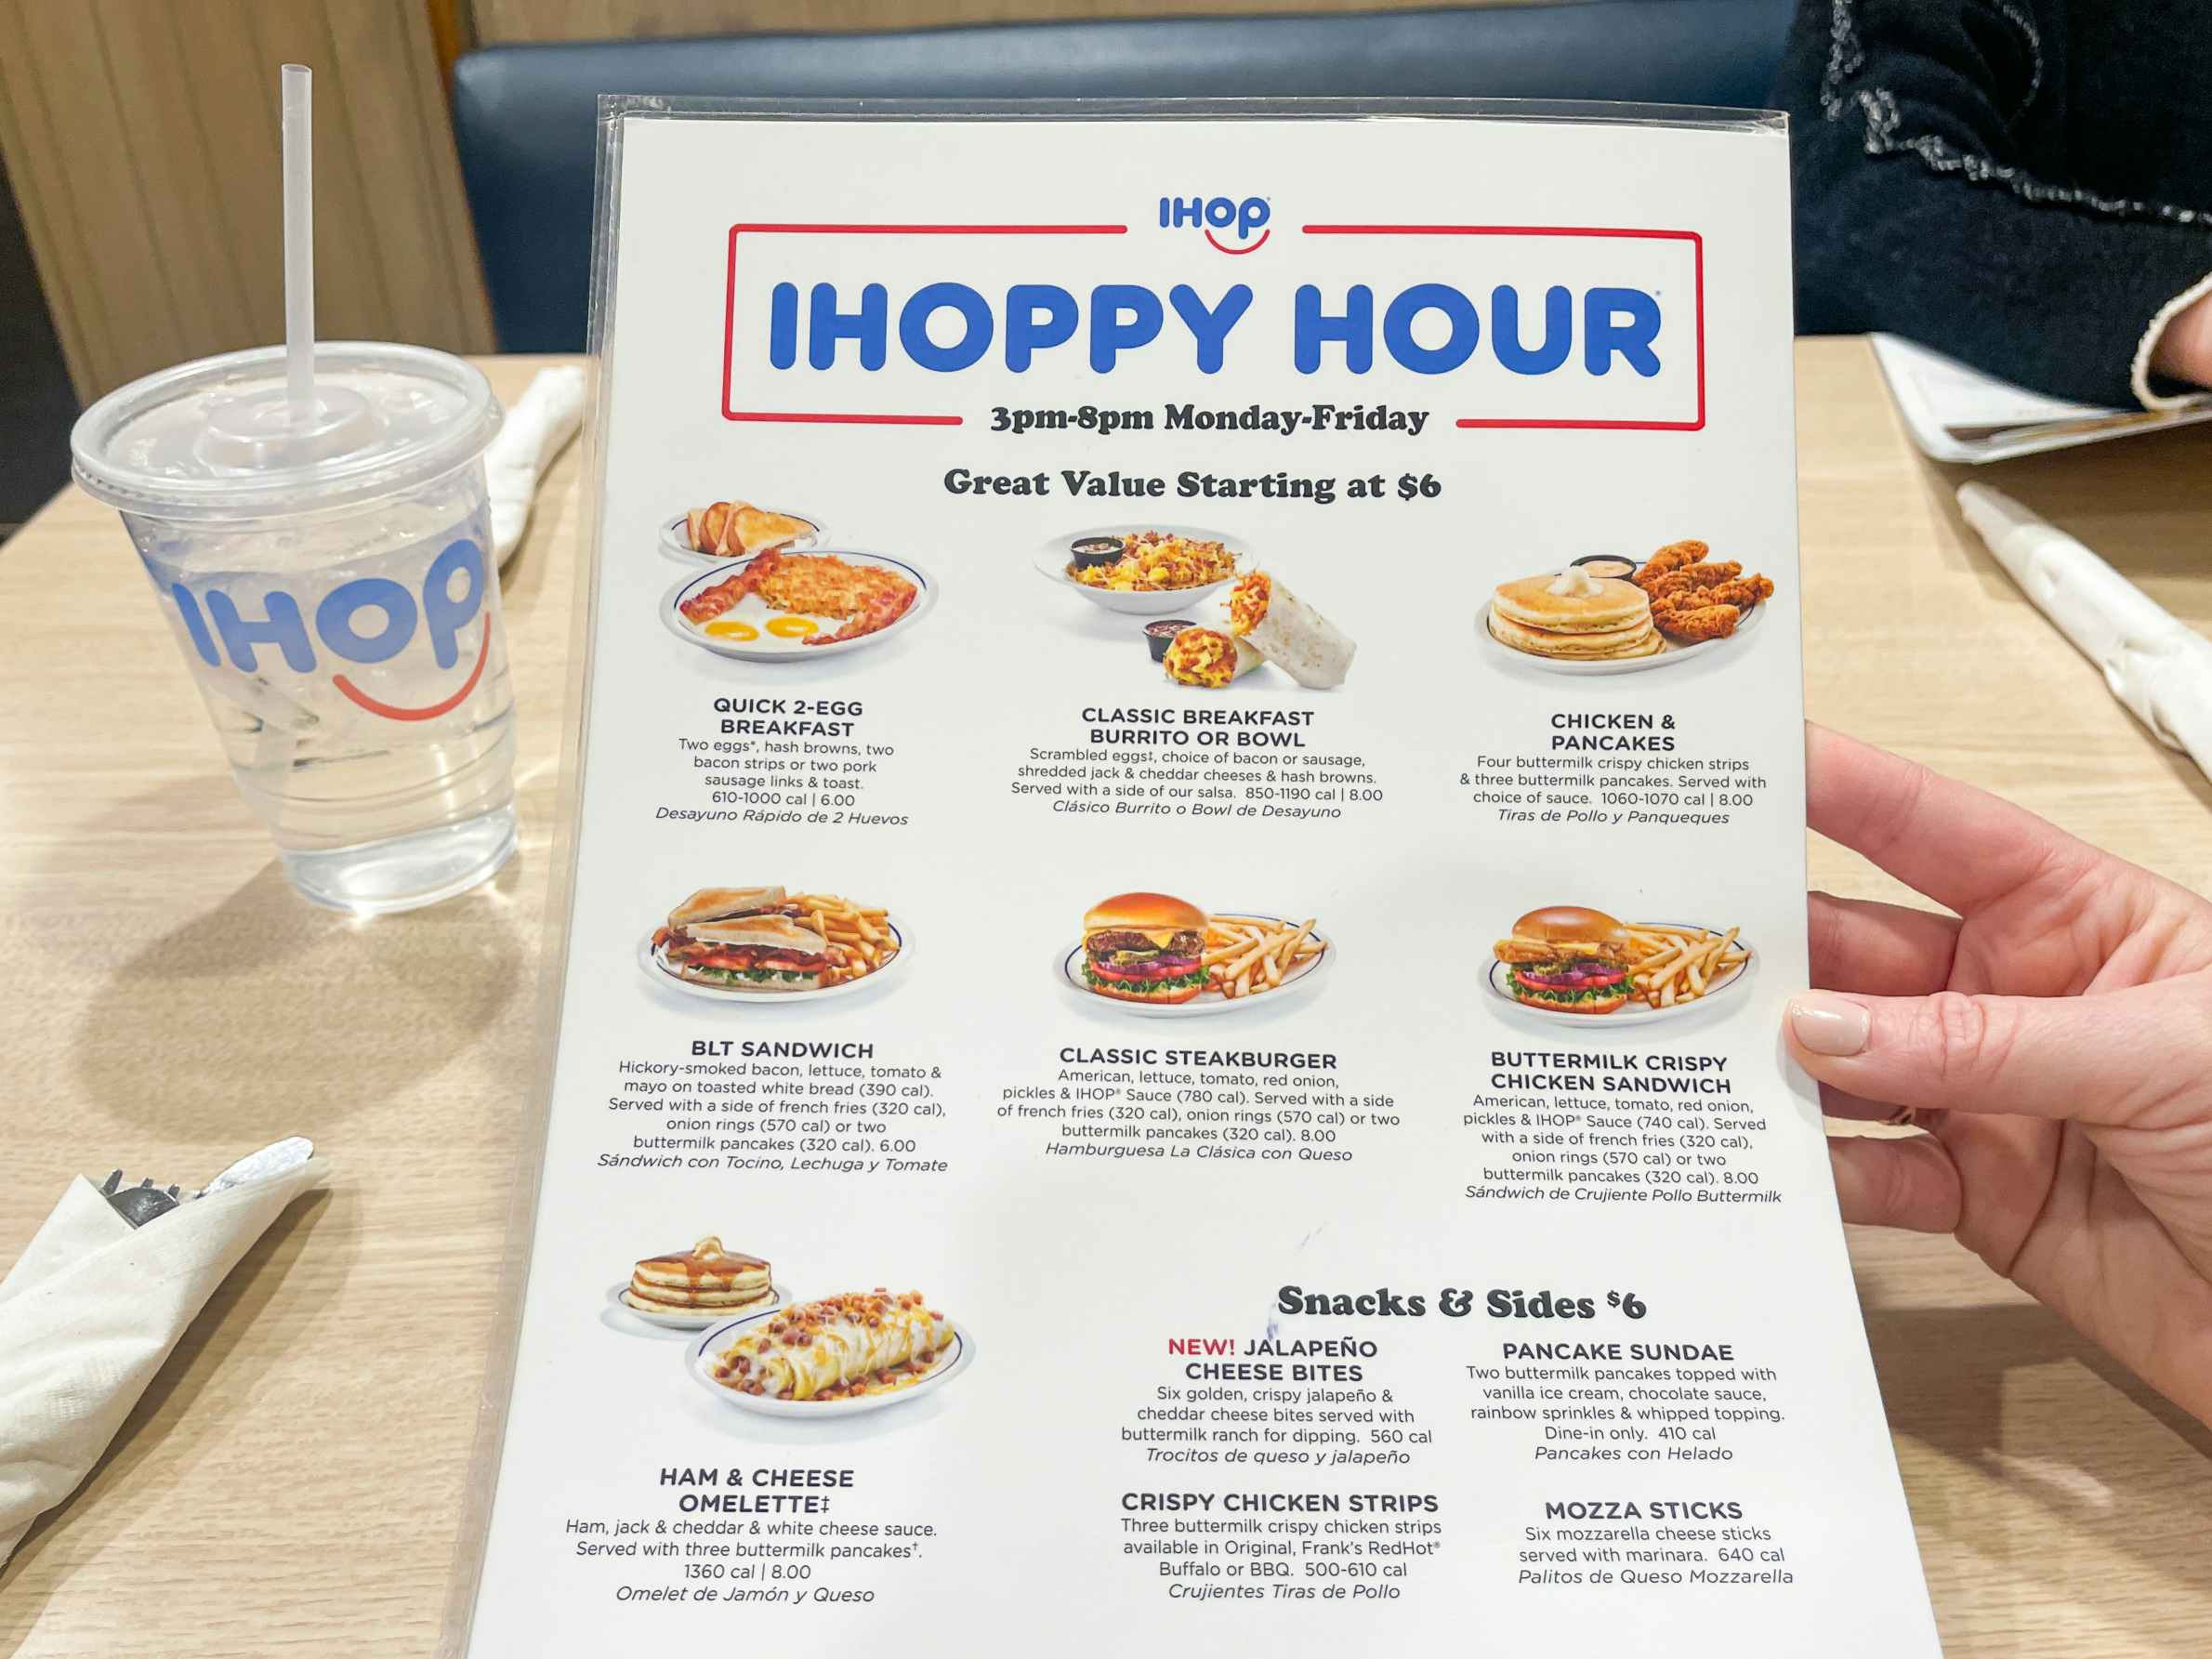 IHOP Deals: BOGO Crepes, Hoppy Hour, Discounts, and more